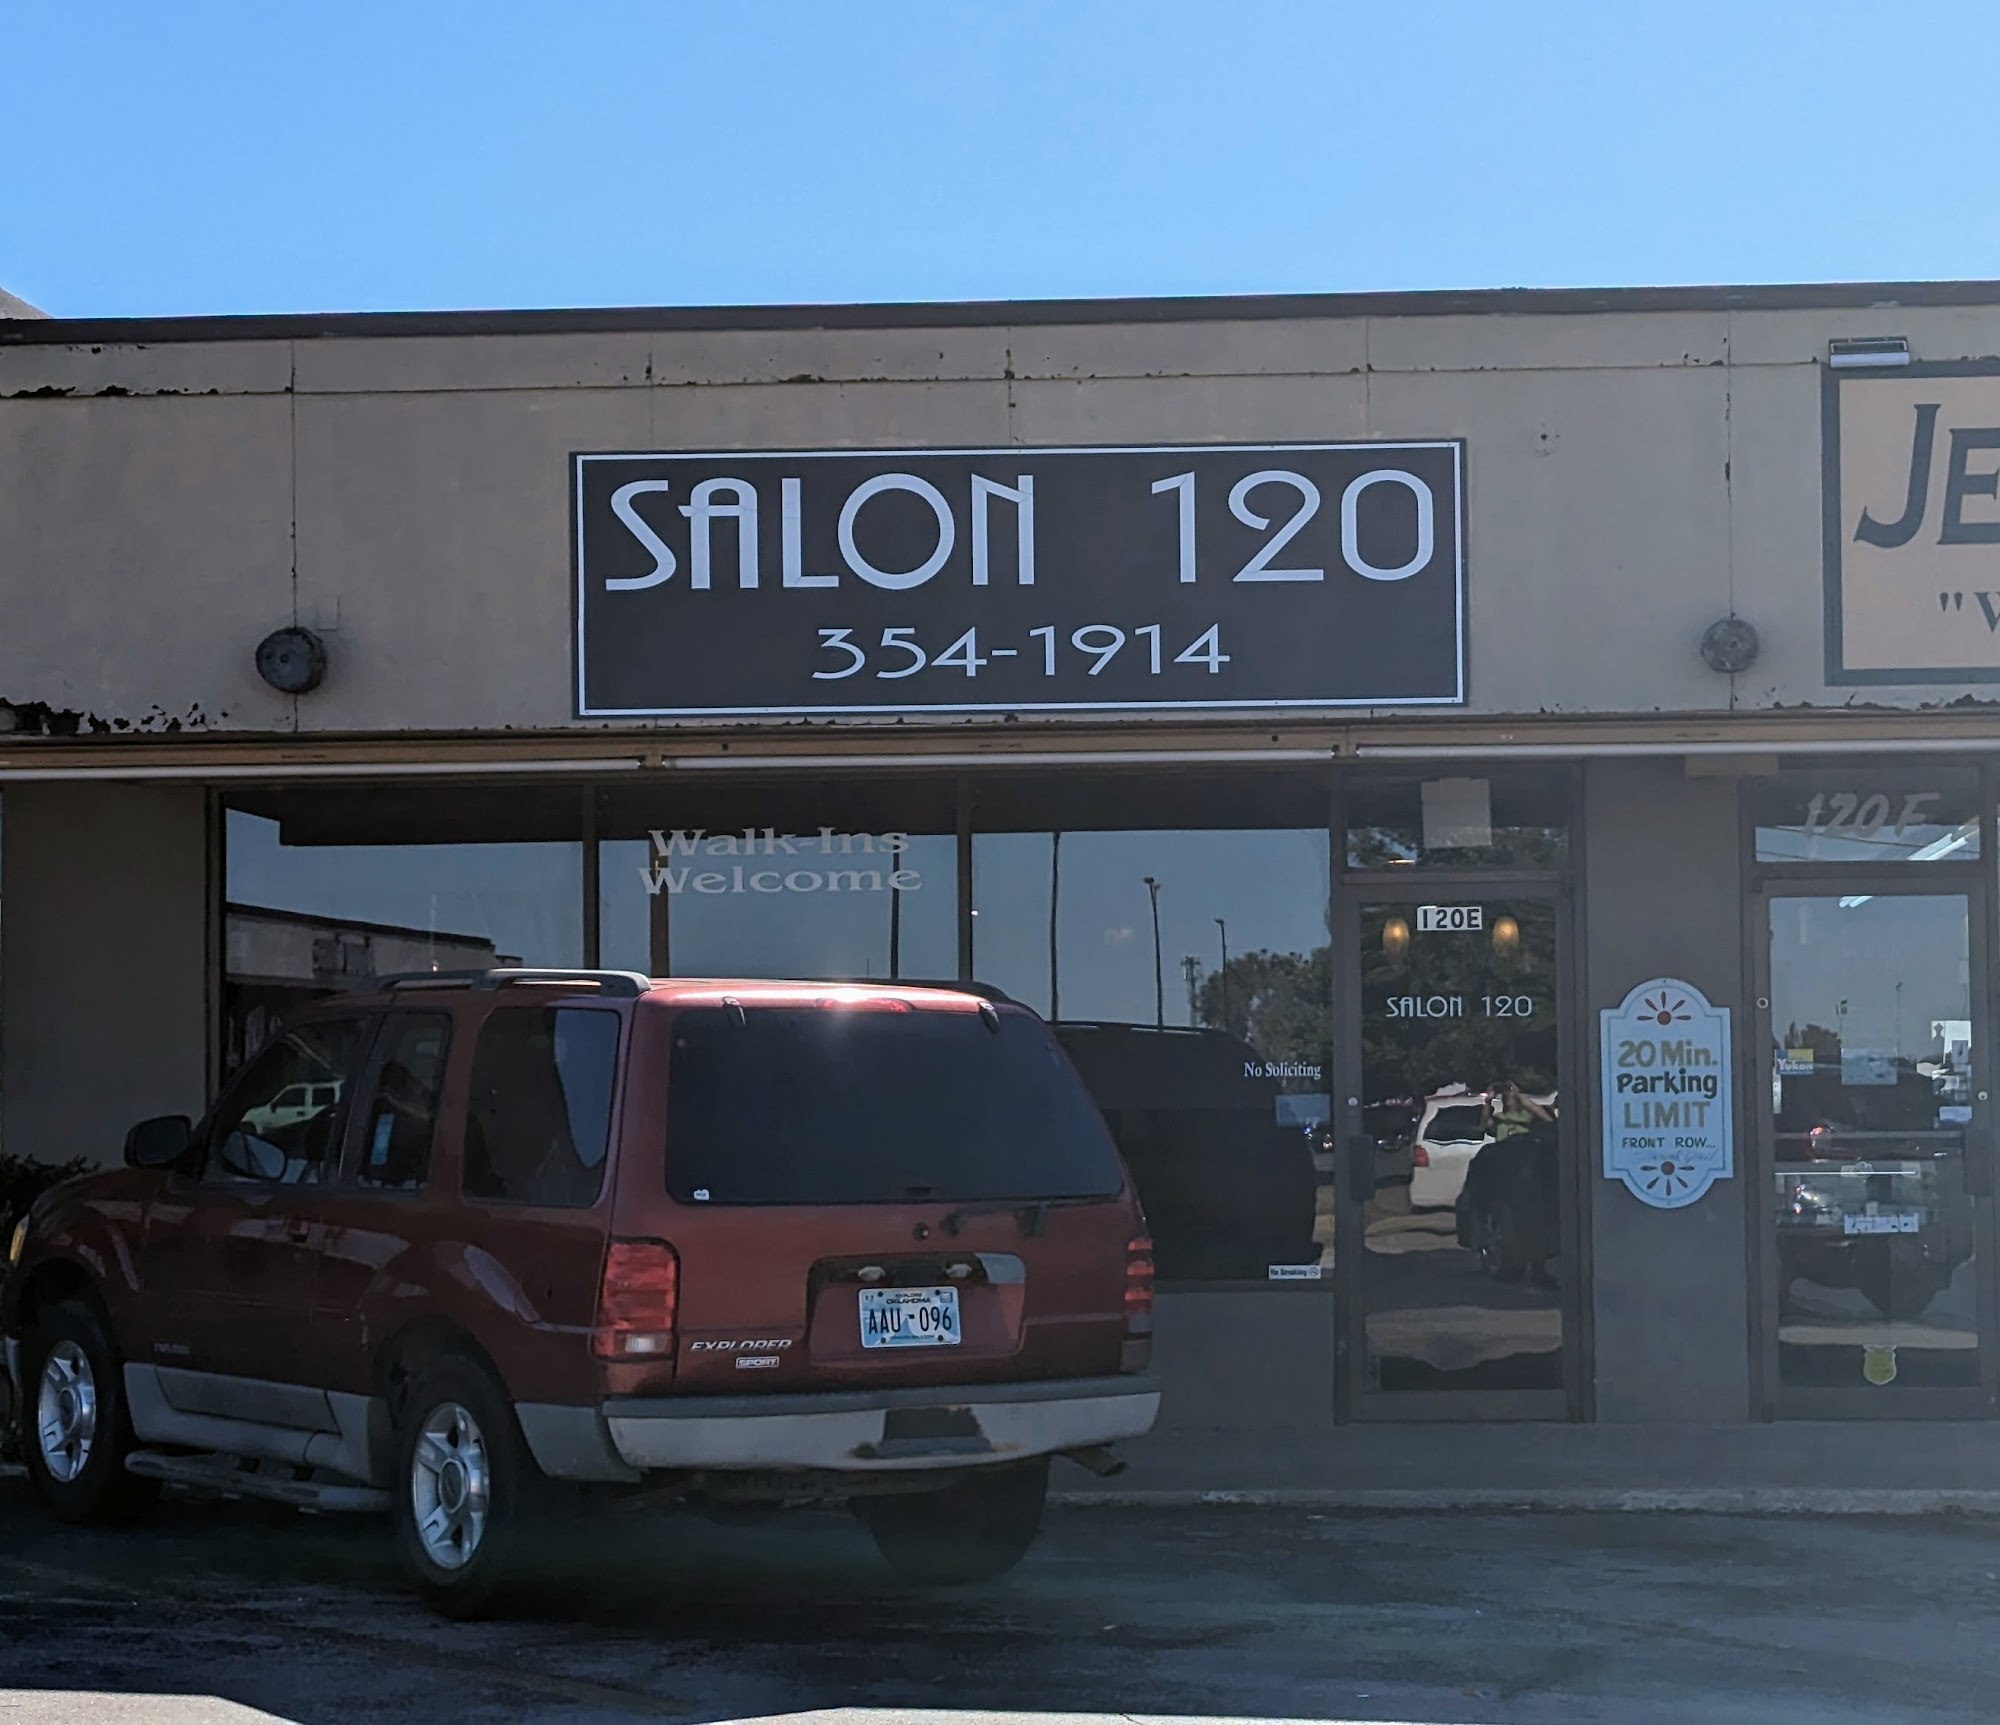 Salon 120